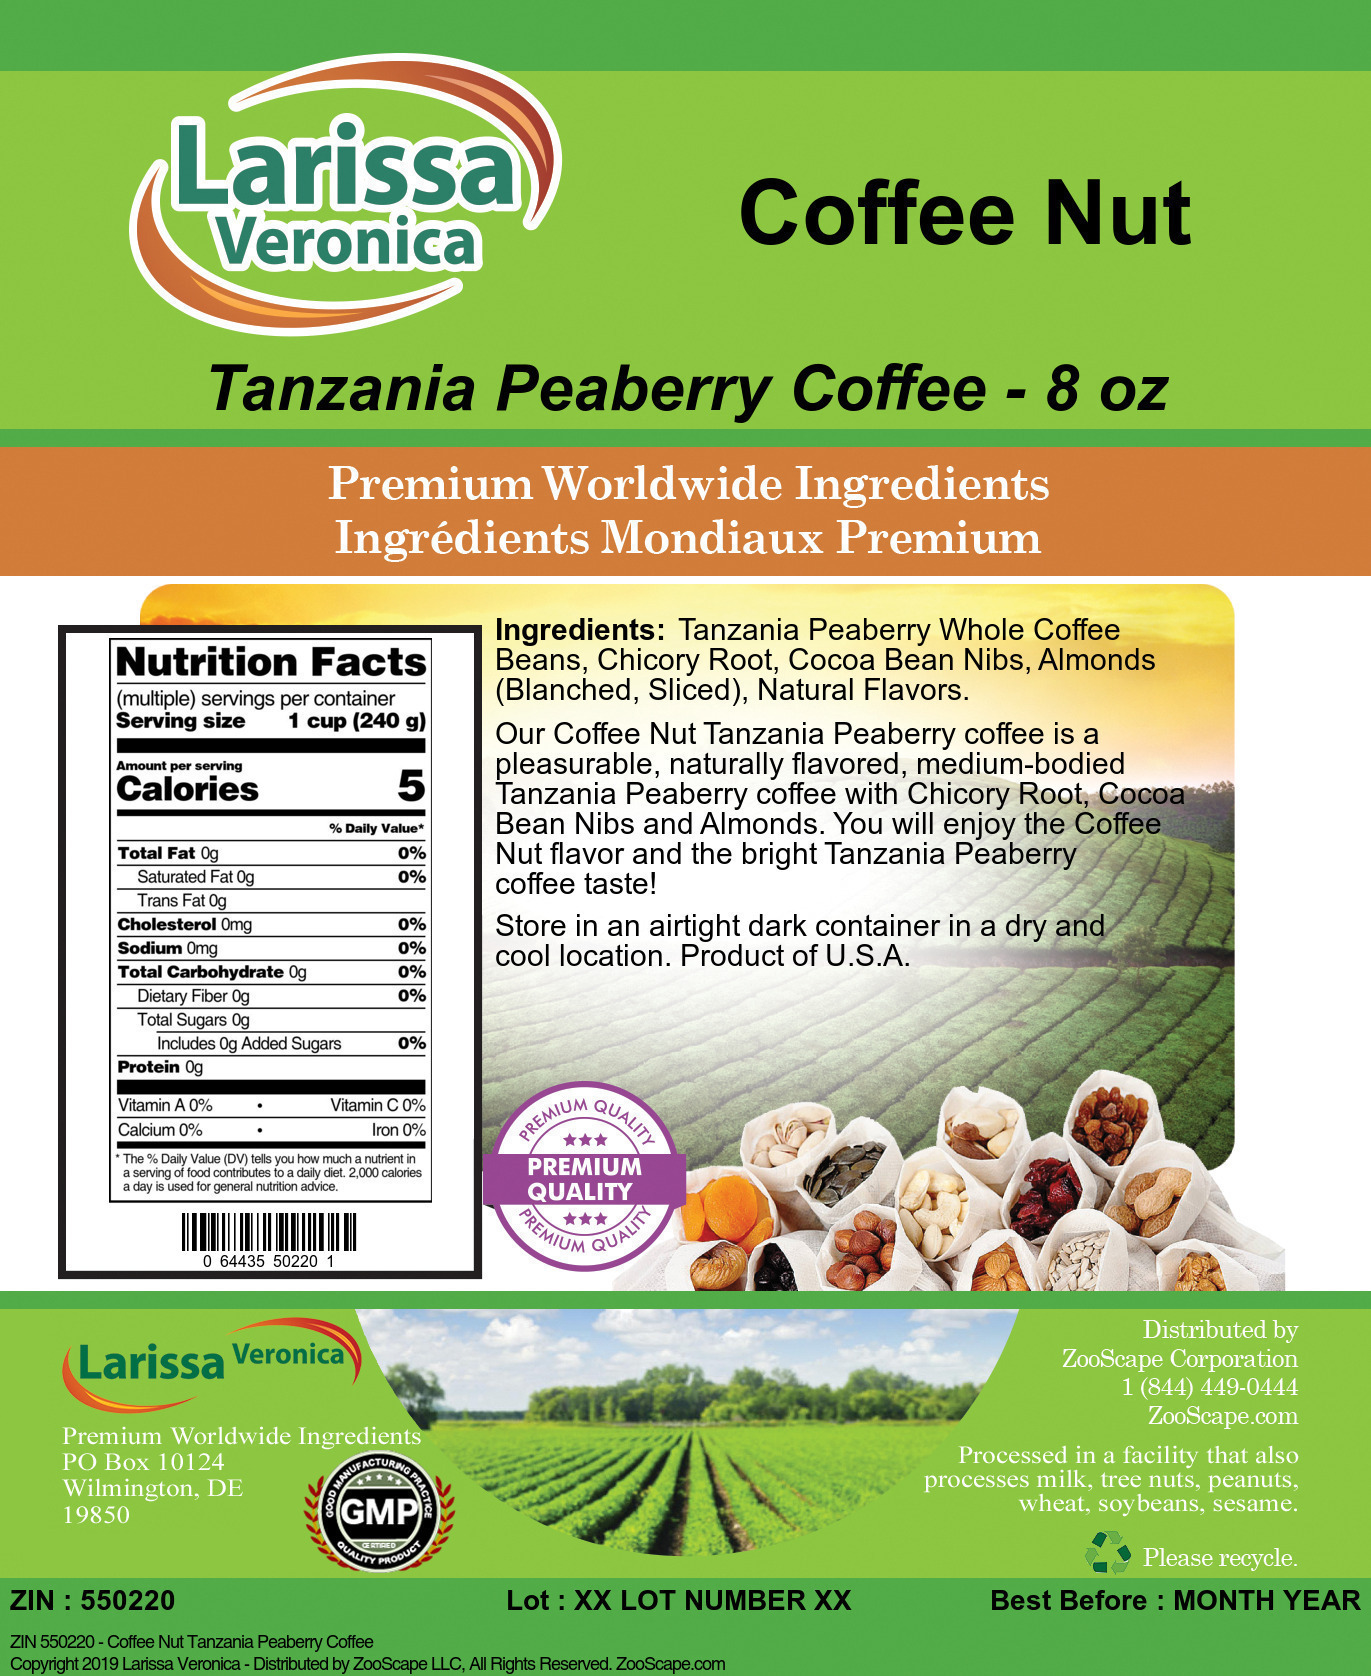 Coffee Nut Tanzania Peaberry Coffee - Label